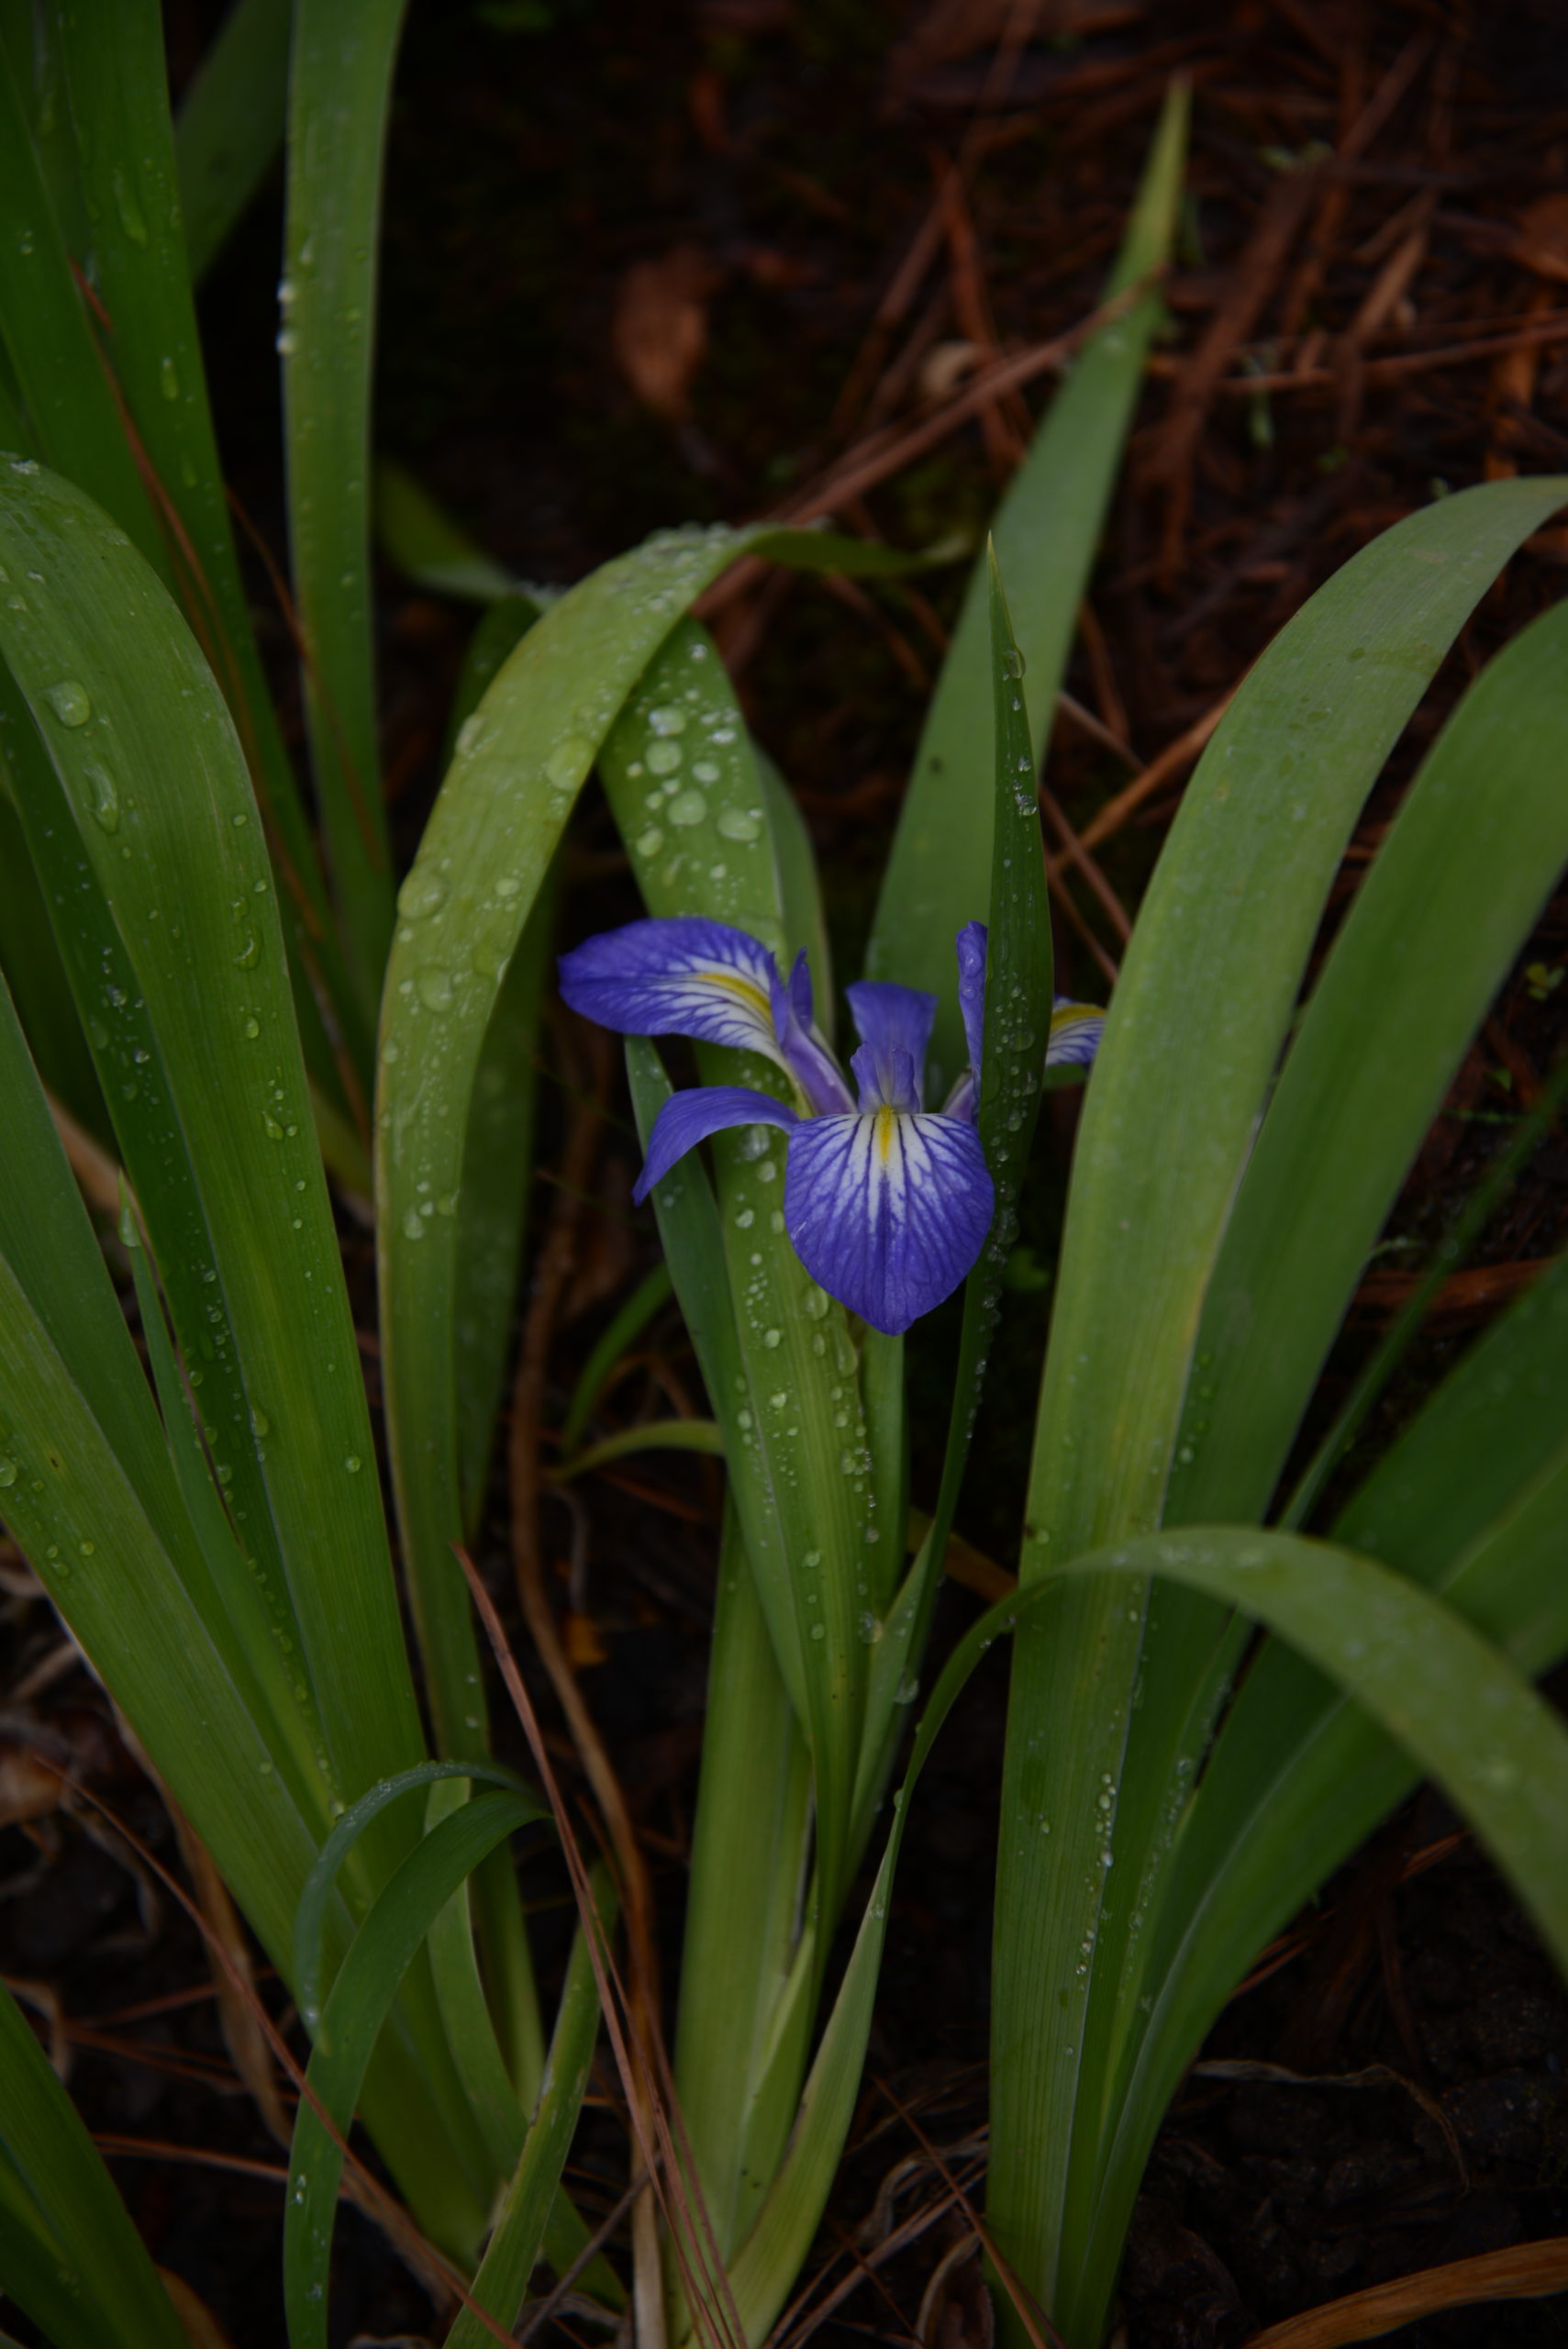 Zigzag Iris, or Iris brevicaulis, in bloom.